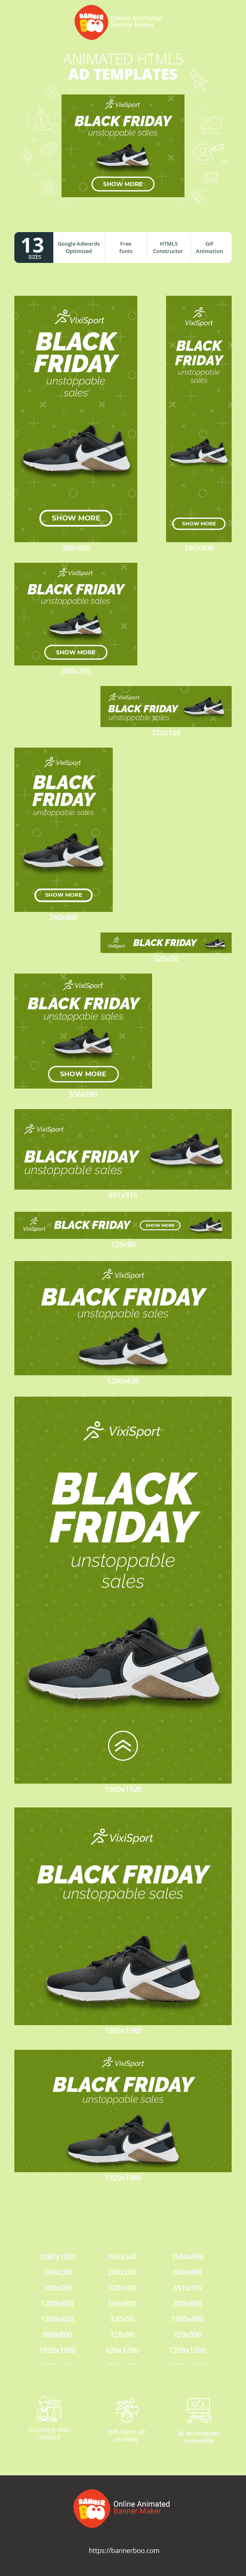 Шаблон рекламного банера — Black Friday — Unstoppable Sales